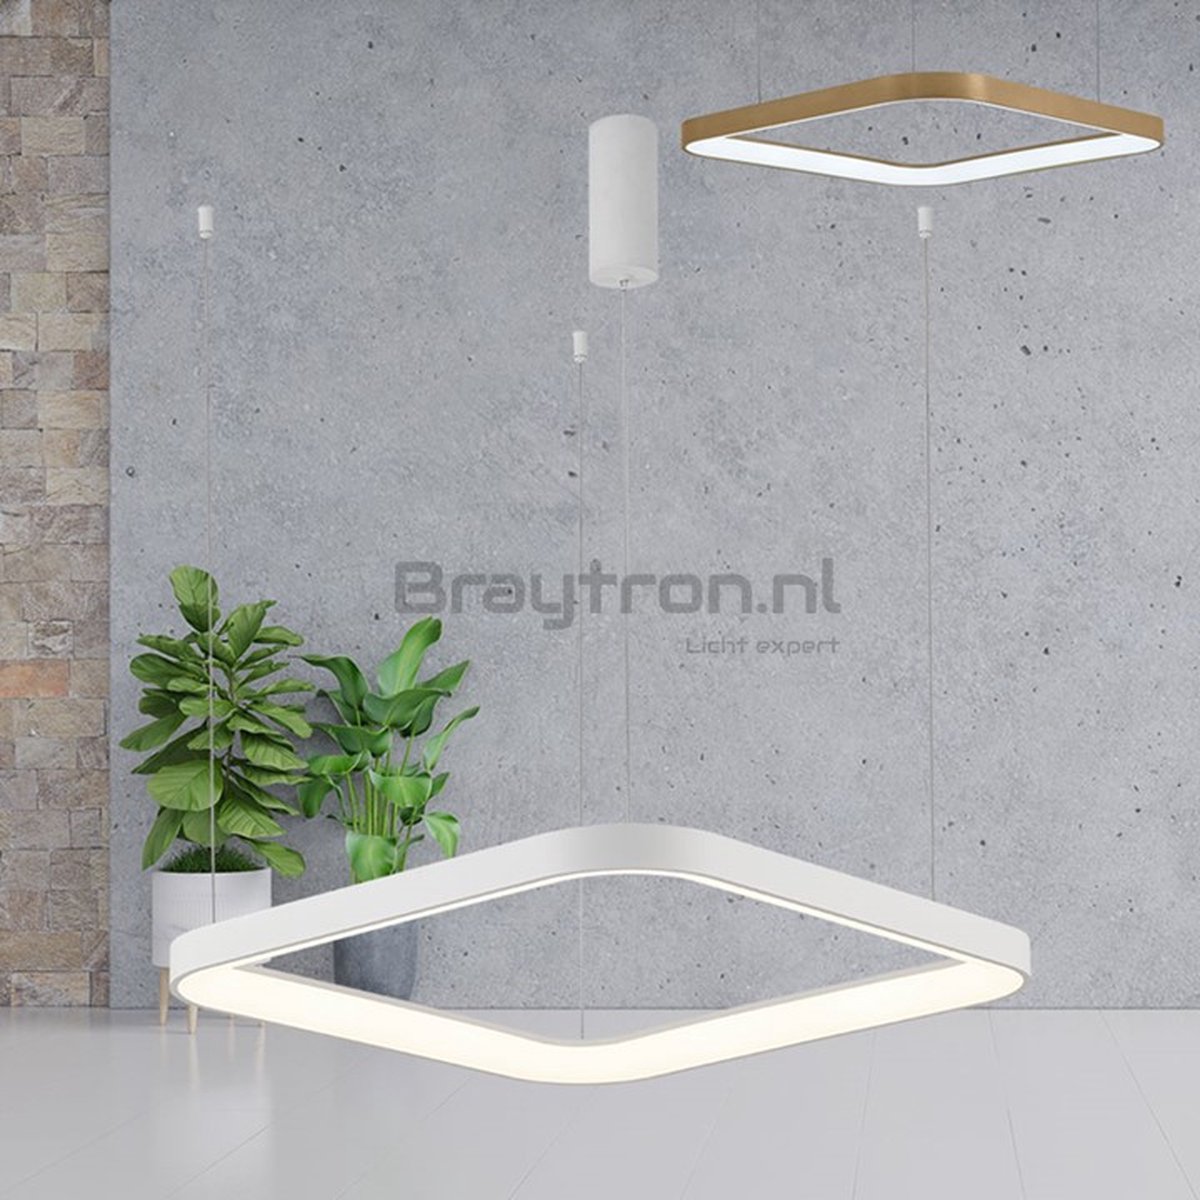 Braytron.nl | Decoratieve LED lamp BELLA | 58X58cm. | Witte vierkante led hanglamp | 46W | 3in1 wit kleuren licht | 3 jaar garantie.